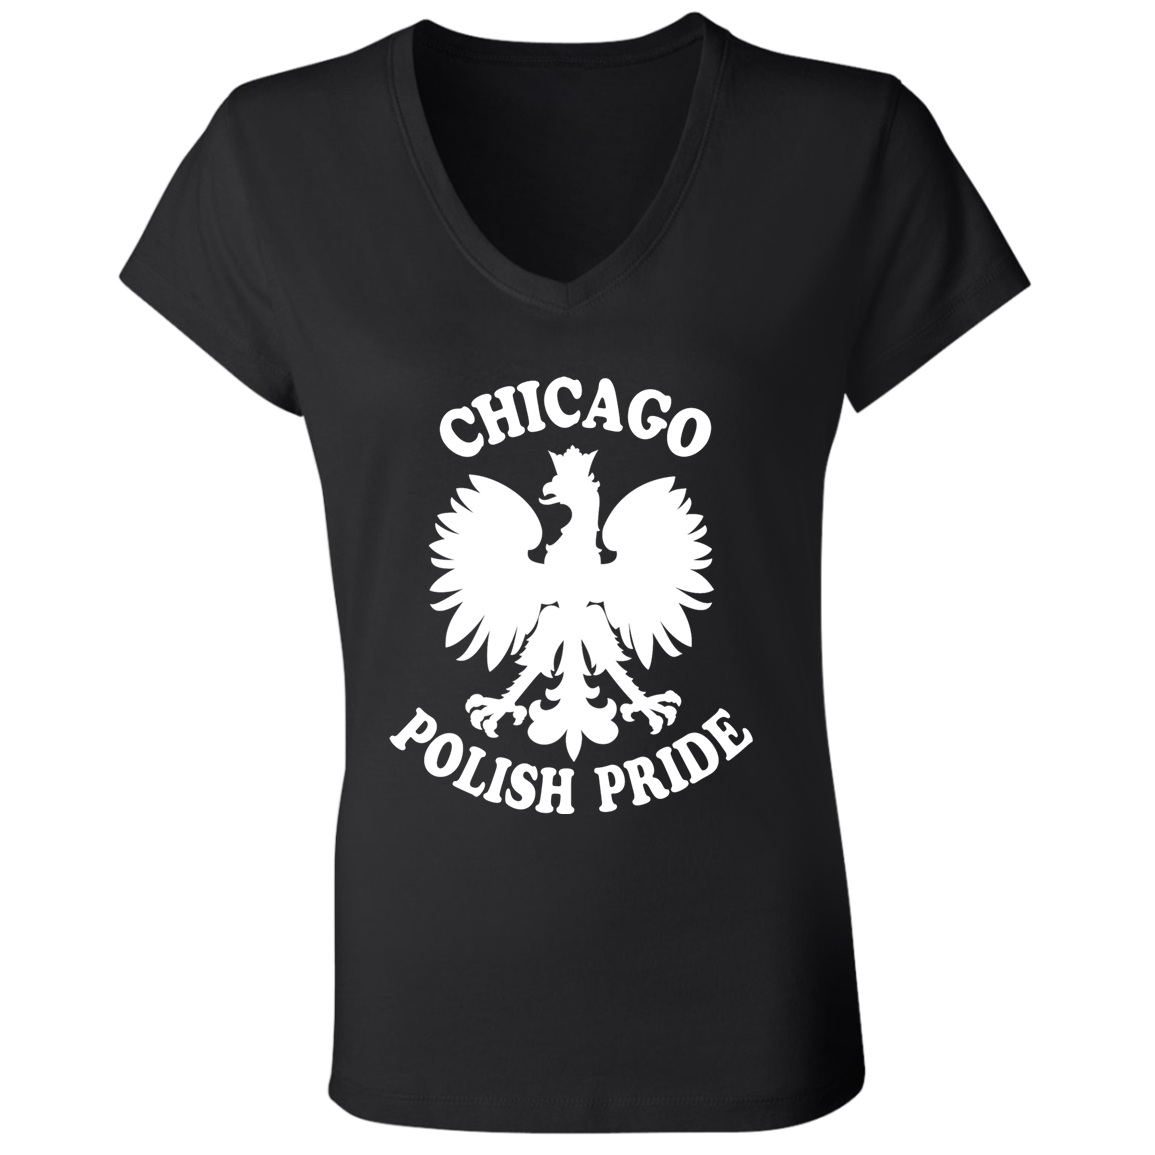 Chicago Polish Pride Apparel CustomCat B6005 Ladies' Jersey V-Neck T-Shirt Black S